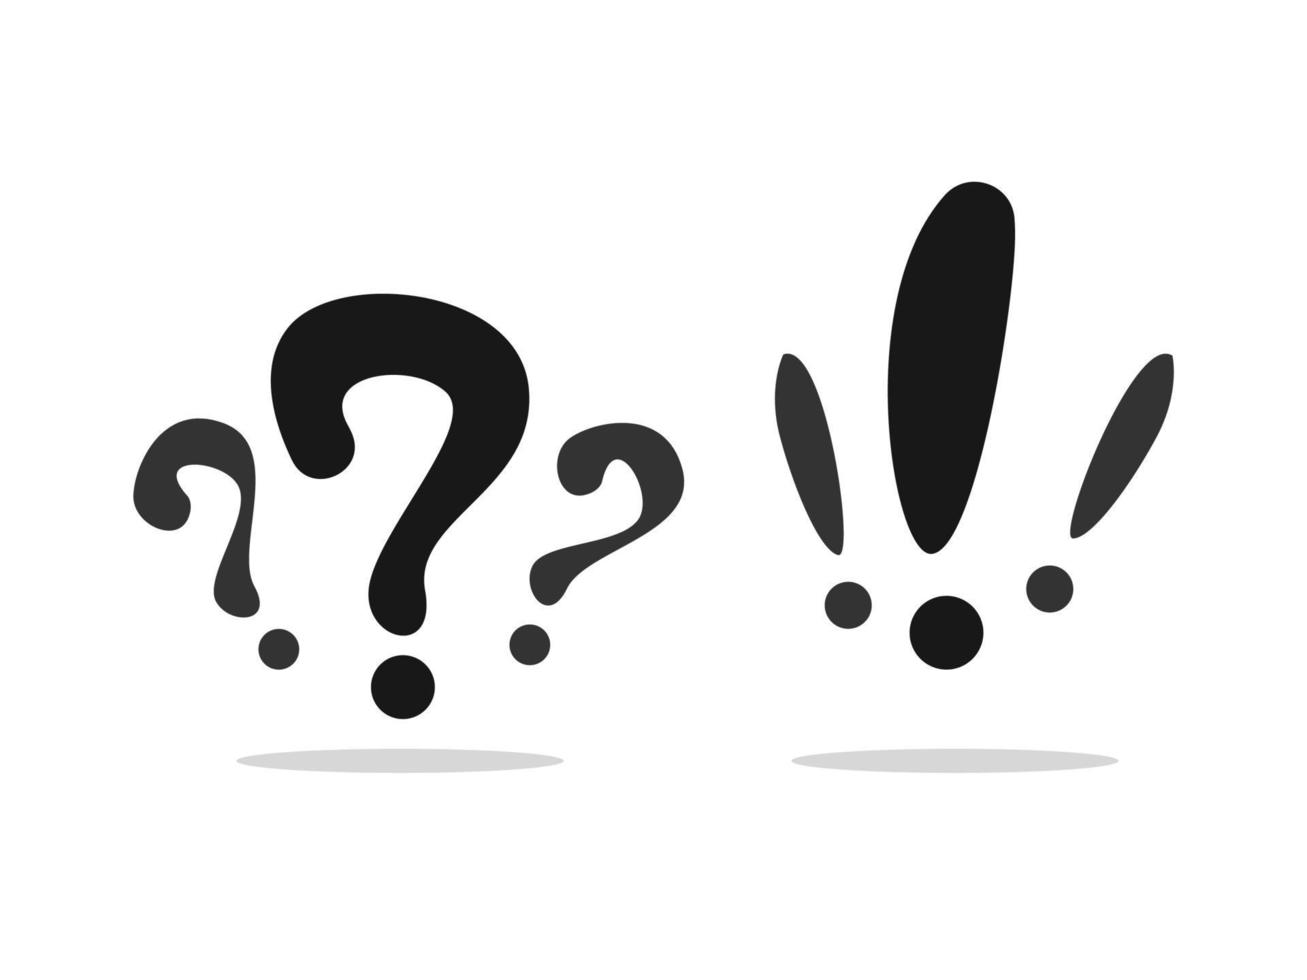 question mark symbol, question icon vector